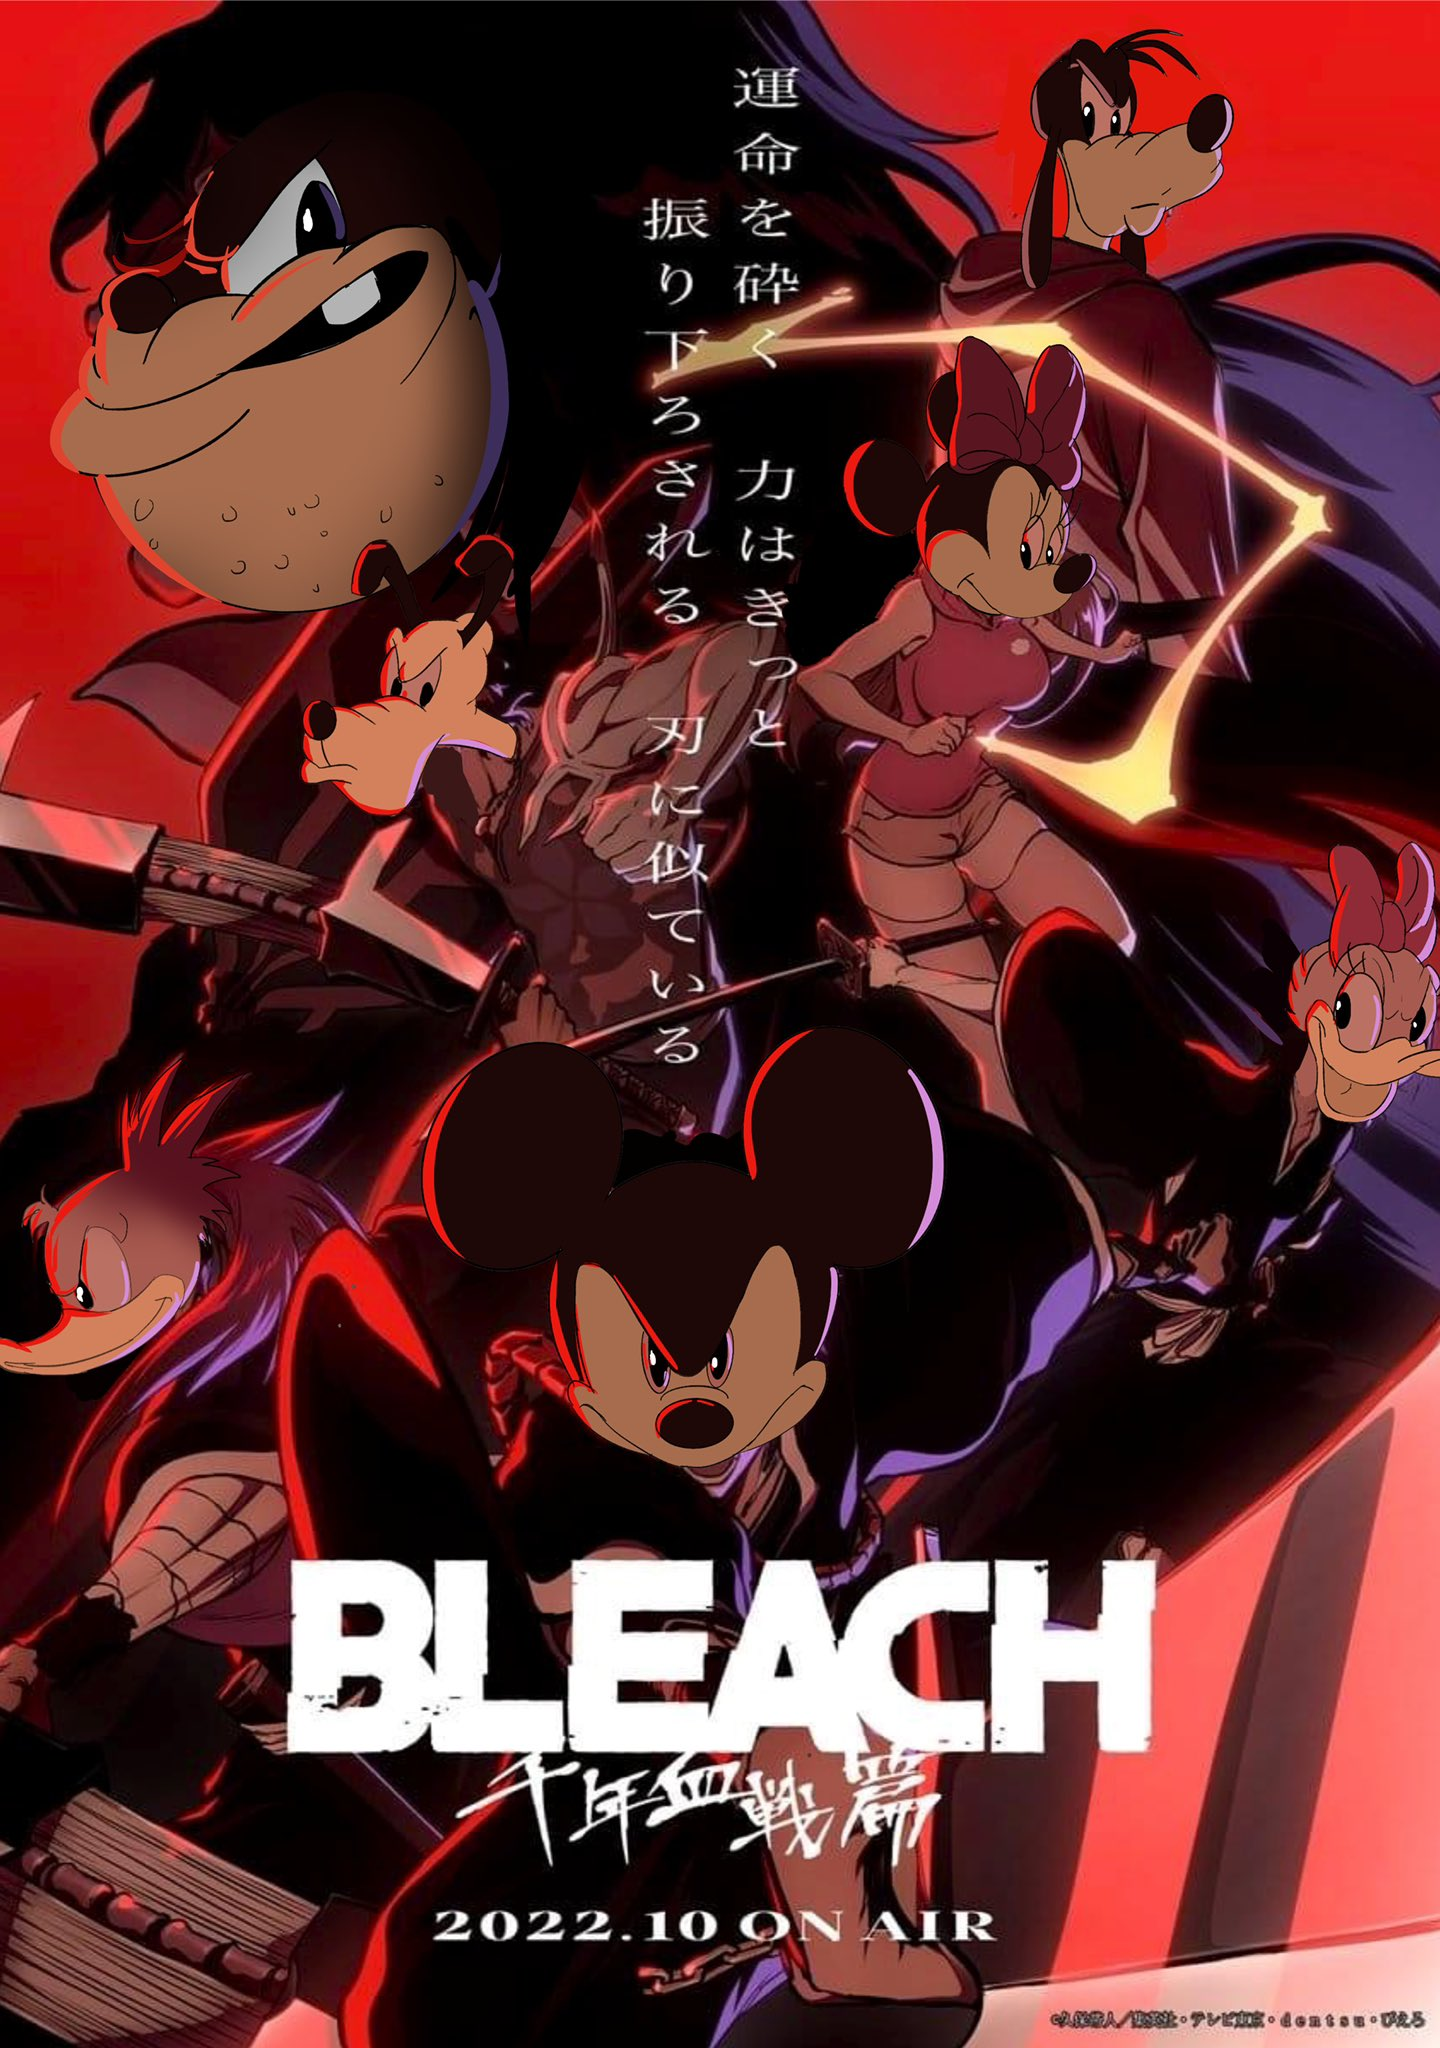 Bleach Leaves Crunchyroll for Hulu/Disney+.. Japan Lists Disney as